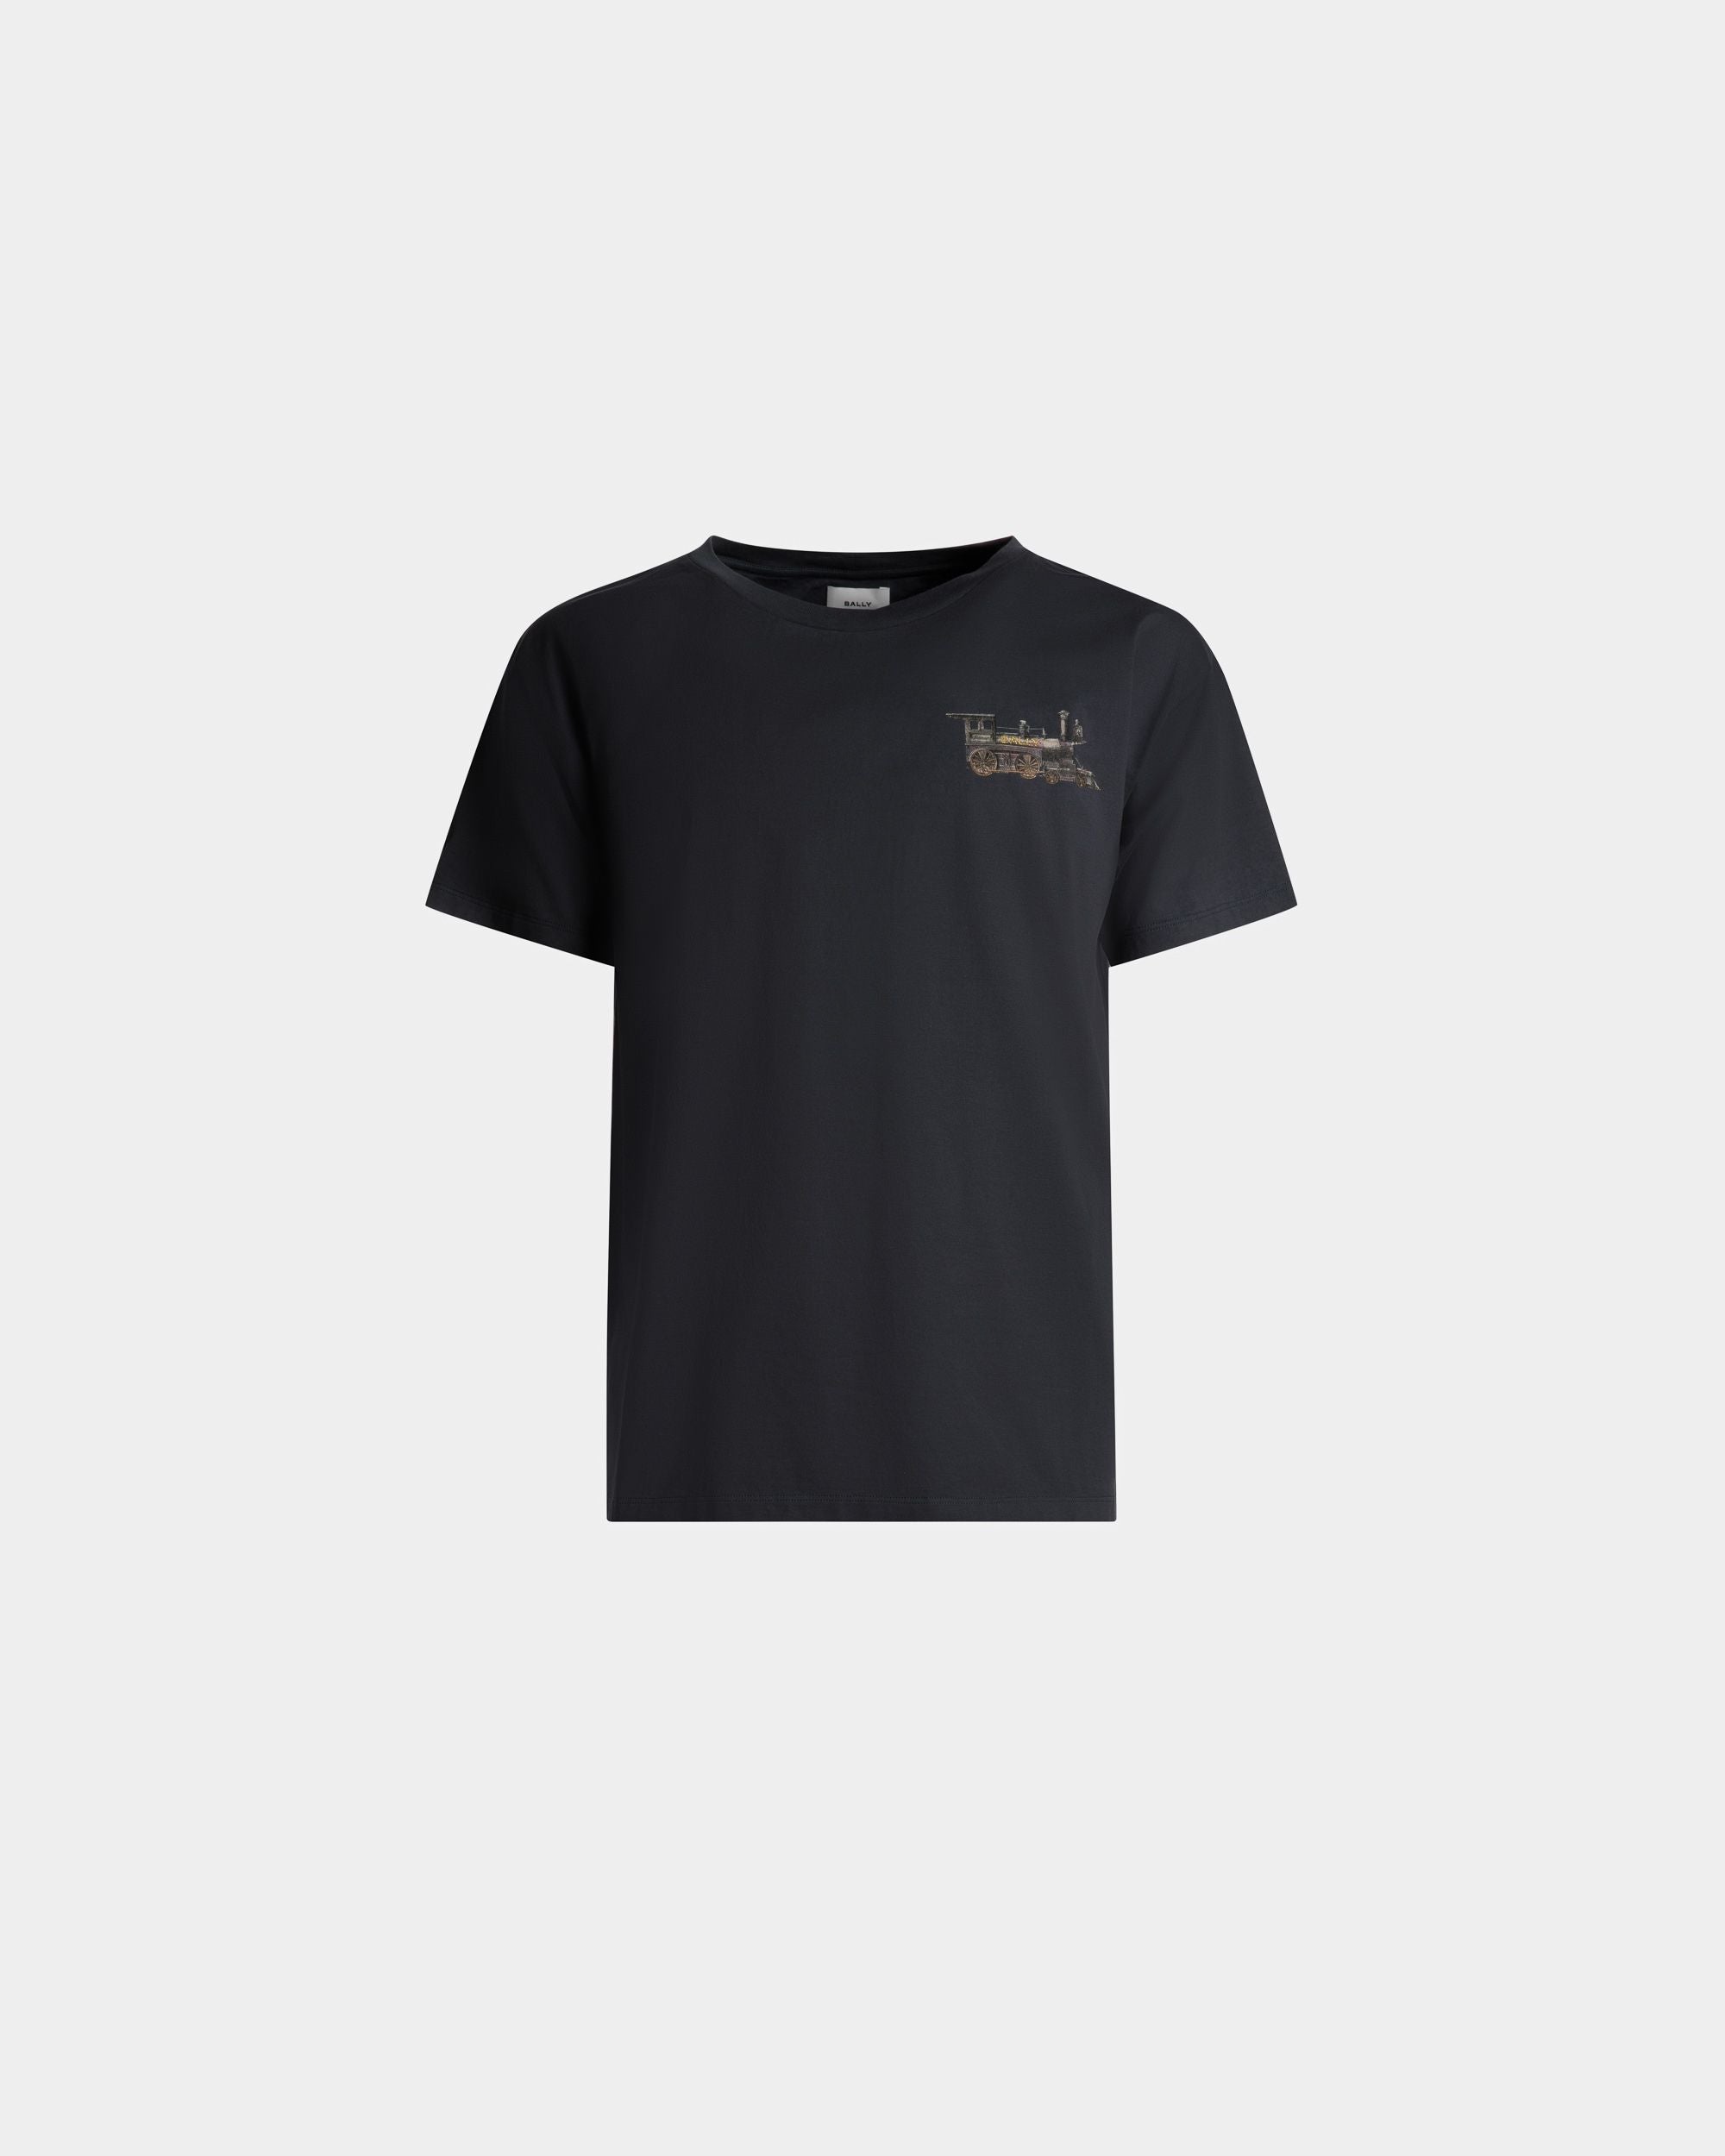 Train Motif T-Shirt | Men's T-Shirt | Stone Cotton | Bally | Still Life Front